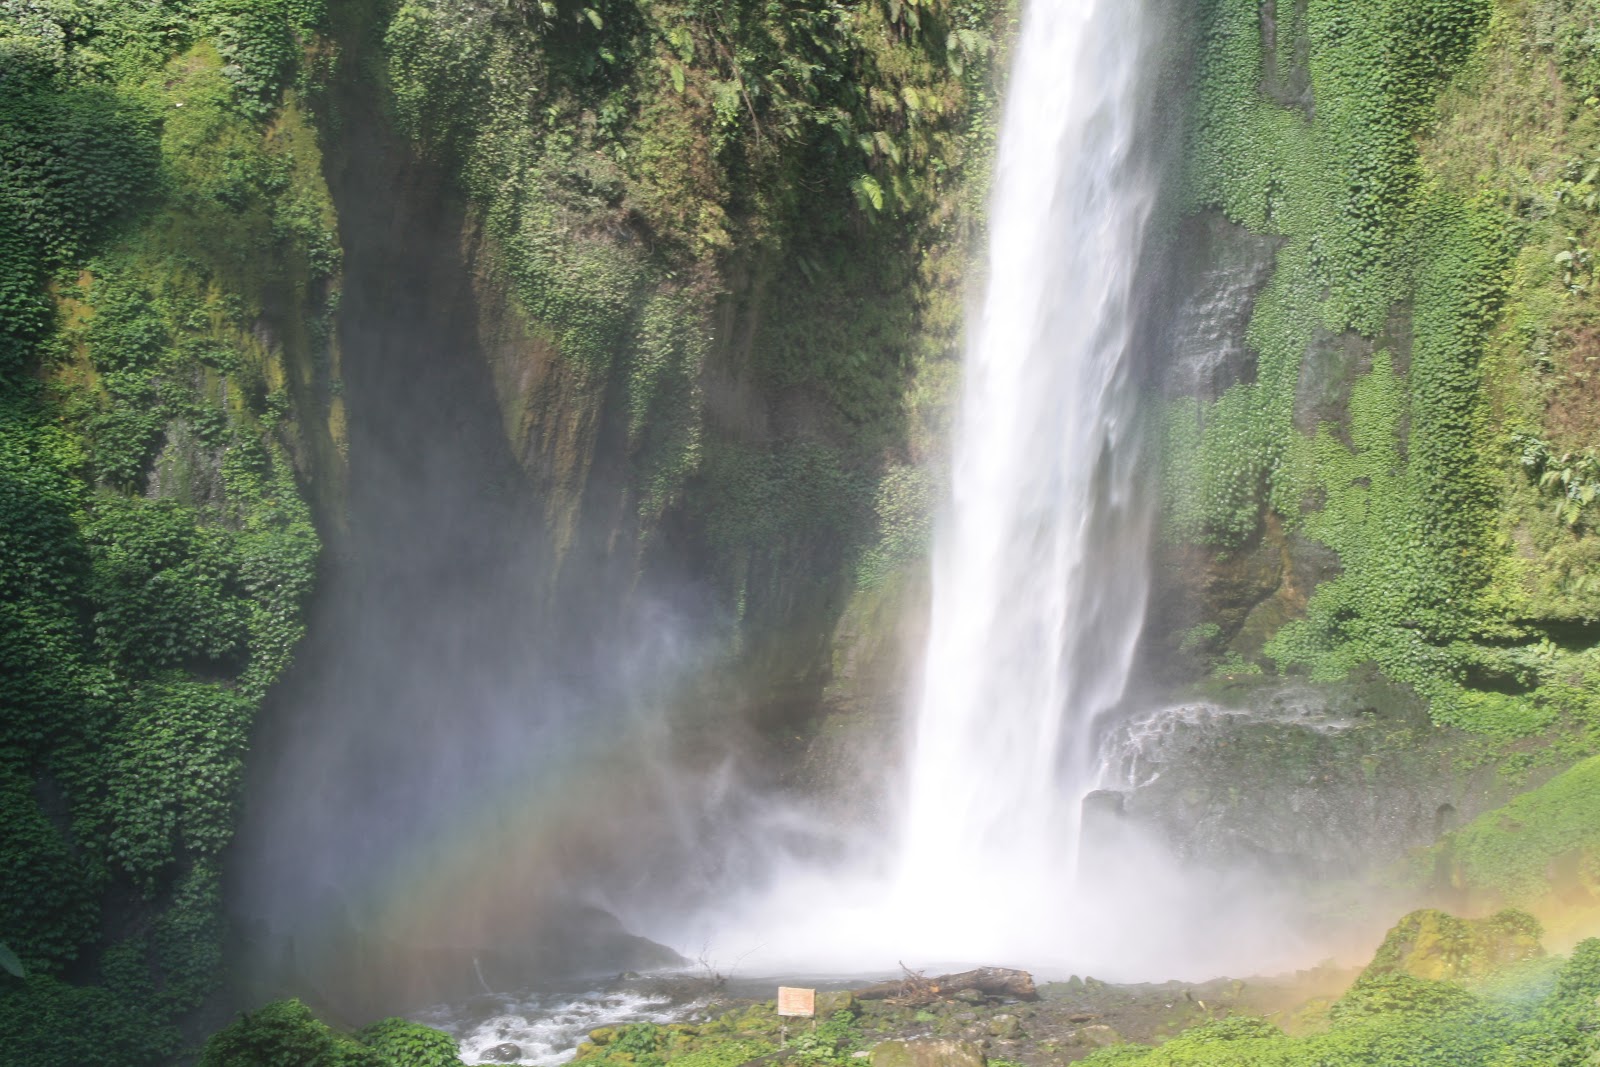 Coban rondo terjun malang waterfall 8nd pelangi